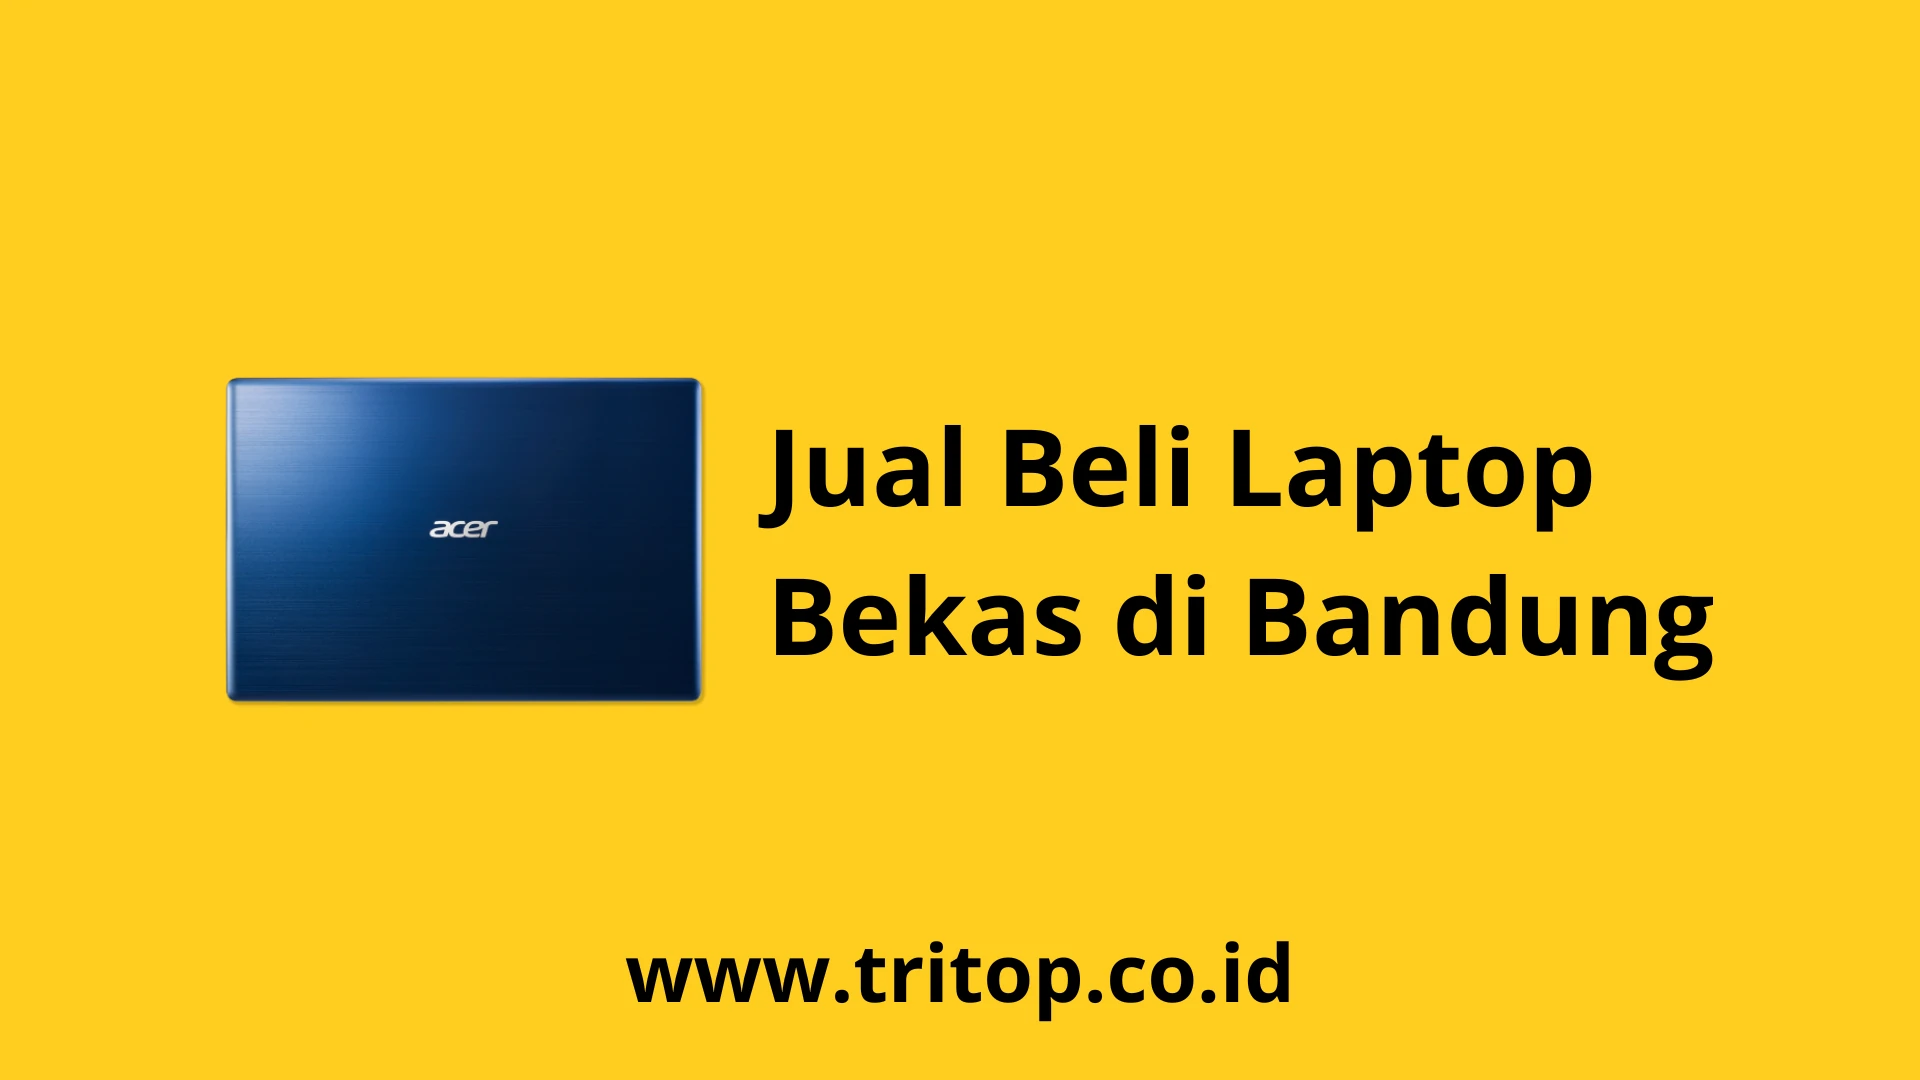 Jual Beli Laptop Bekas di Bandung www.tritop.co.id